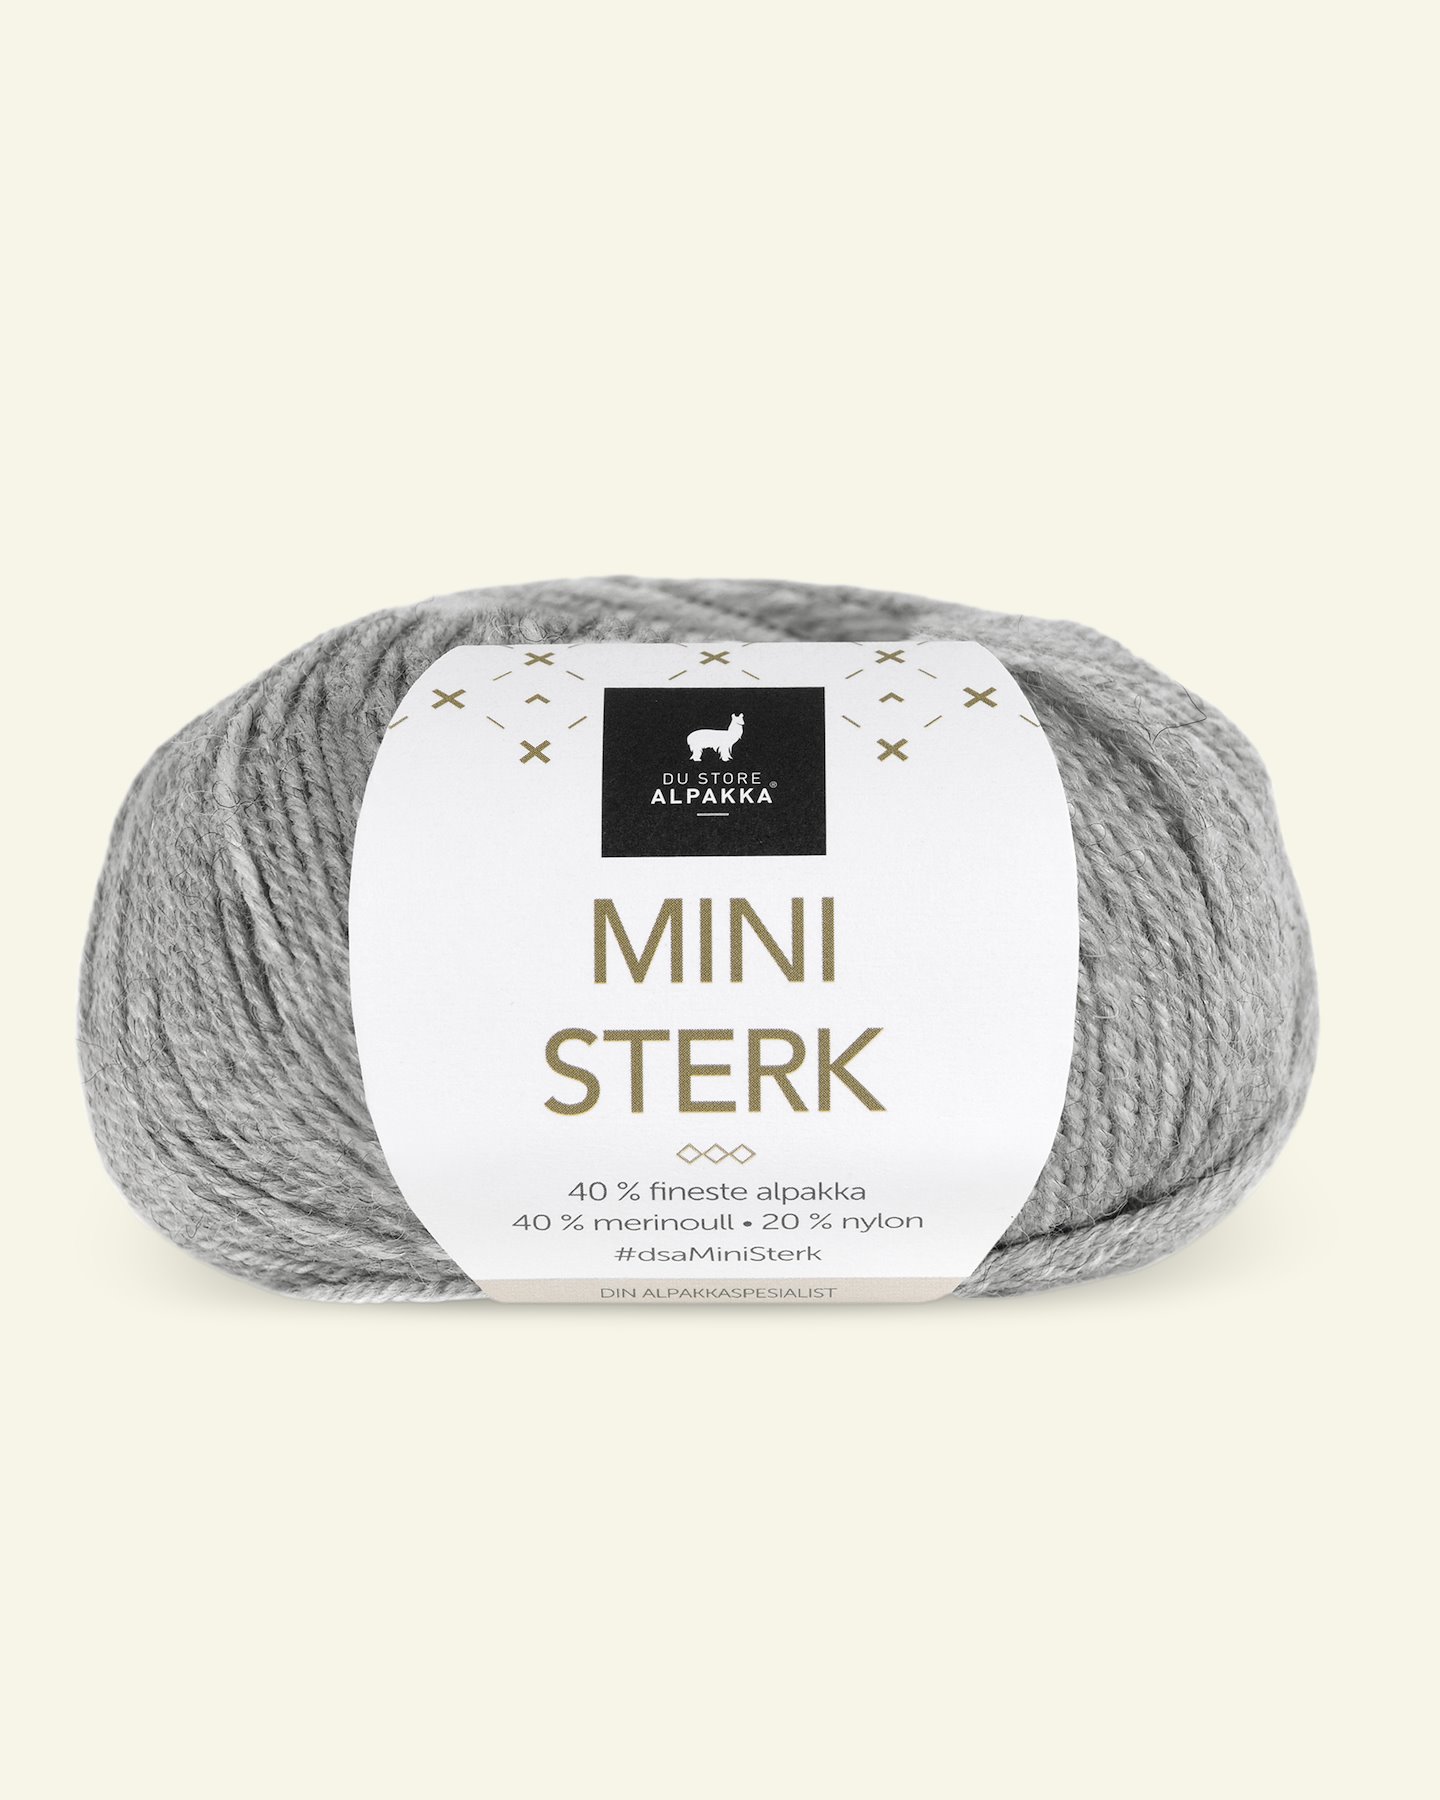 Du Store Alpakka,alpaca merino mixed yarn "Mini Sterk", grey melange (822) 90000626_pack